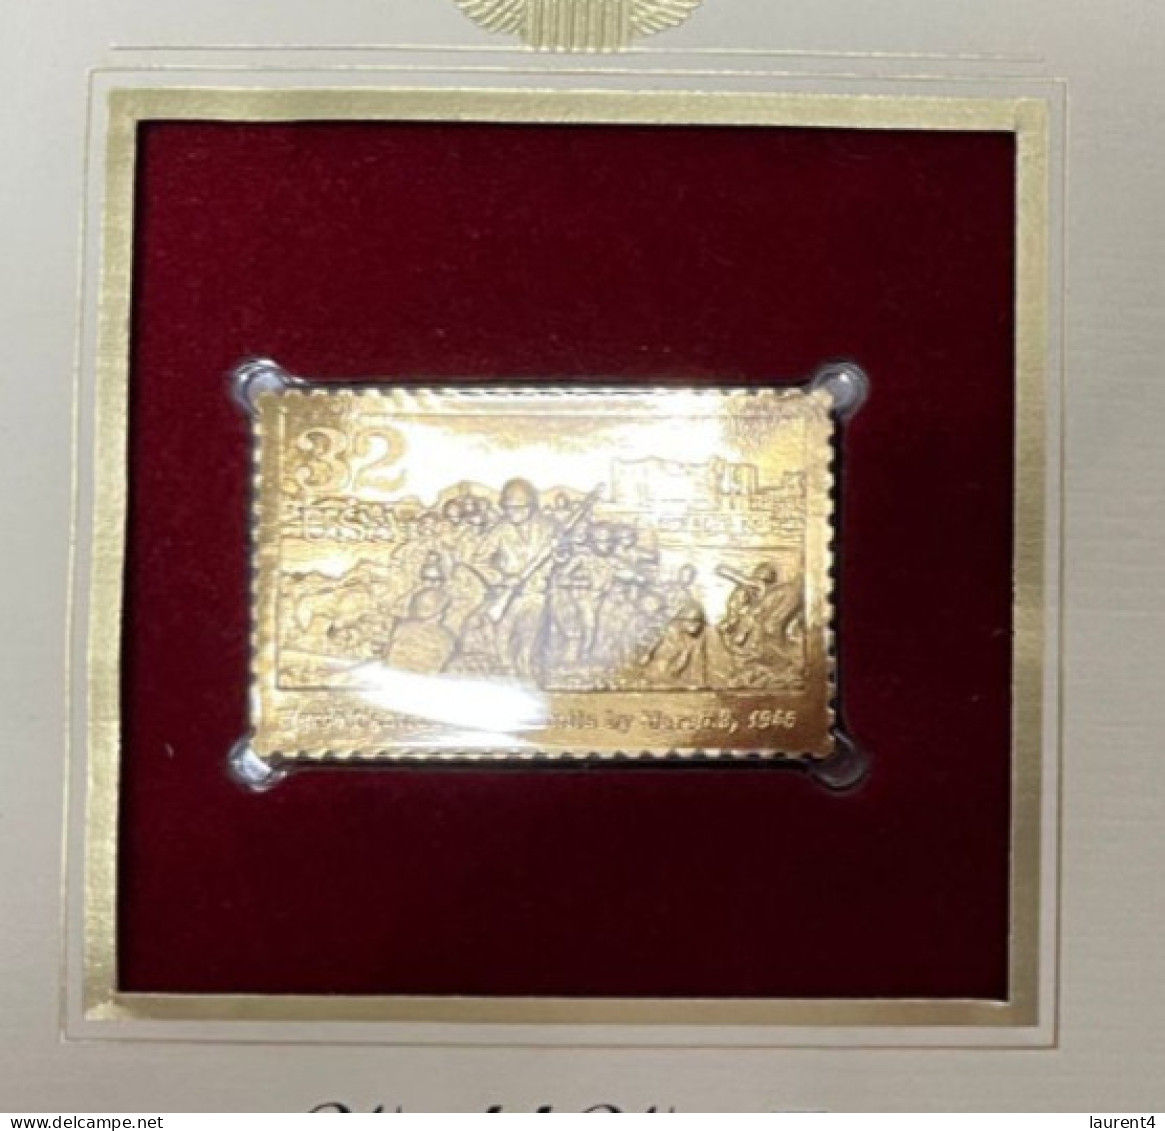 3-5-2024 (4 Z 4 ) USA - GOLD Stamp (Workd War II) Manila Freed (1995 Honolulu - Hawaii) - Militares